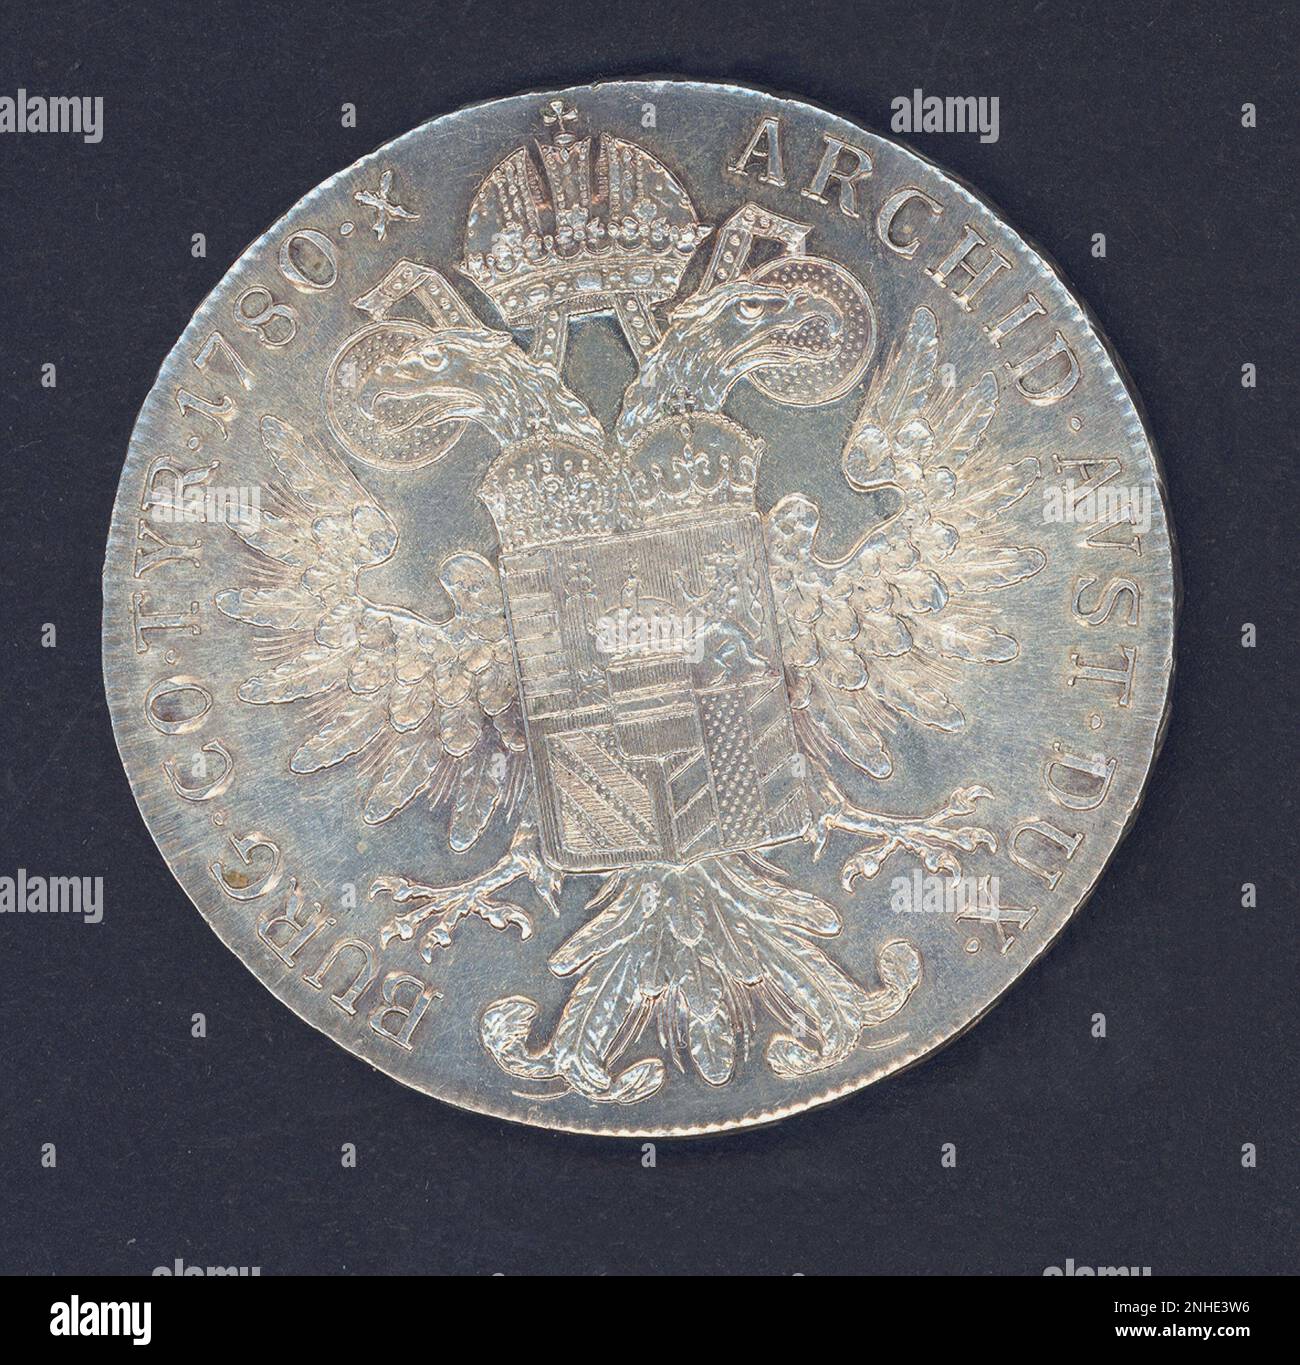 1780, Italia: Kaiserin Empress MARIA THERESIA (Terezie, Wien 1717 - 1780), Regina d'Ungheria e Boemia, Una moneta argentata Tallero - ASBURGO - ASBURGO - ABSBURG - ABSBURGO - ABSBURG - ASBURGO - Impero Austro-Ungarico - TERESA - corona - corona - più alta - moneta - numismatica - numismatica - araldica - araldica - stemma - IMPERATRICE - gioielli - gioielleria - gioiello - Famiglia - reali austriaci - royalty austrian - nobili - nobiltà - nobiltà - BORBONE - AUSTRIA - LOMBARDIA - Lombardia --- Archivio GBB Foto Stock